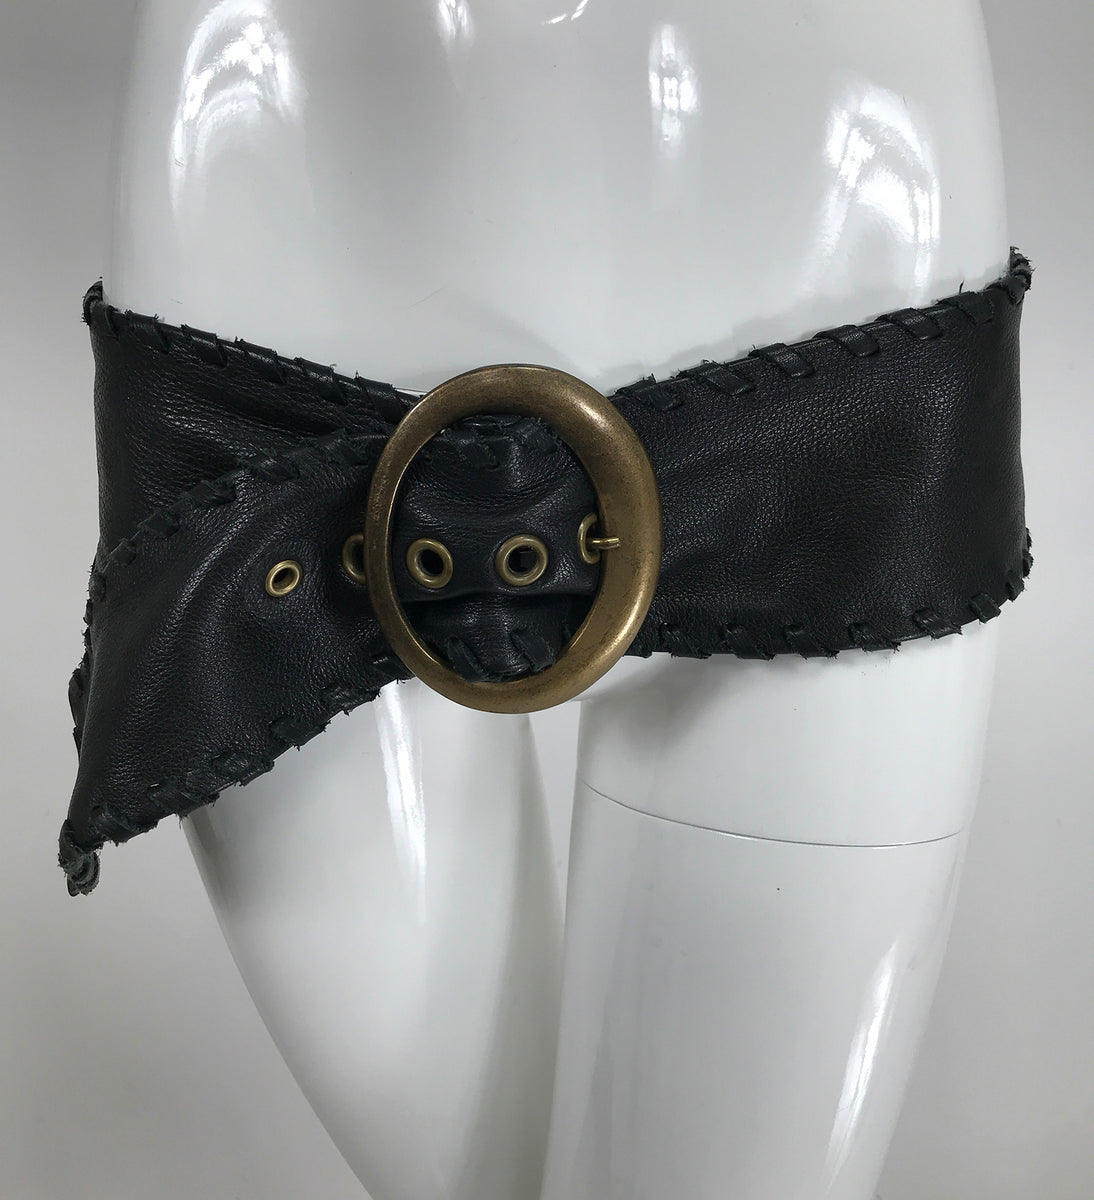 Leather Rock Contoured Soft Black Whip Stitched Wide Leather Belt Bras –  Palm Beach Vintage